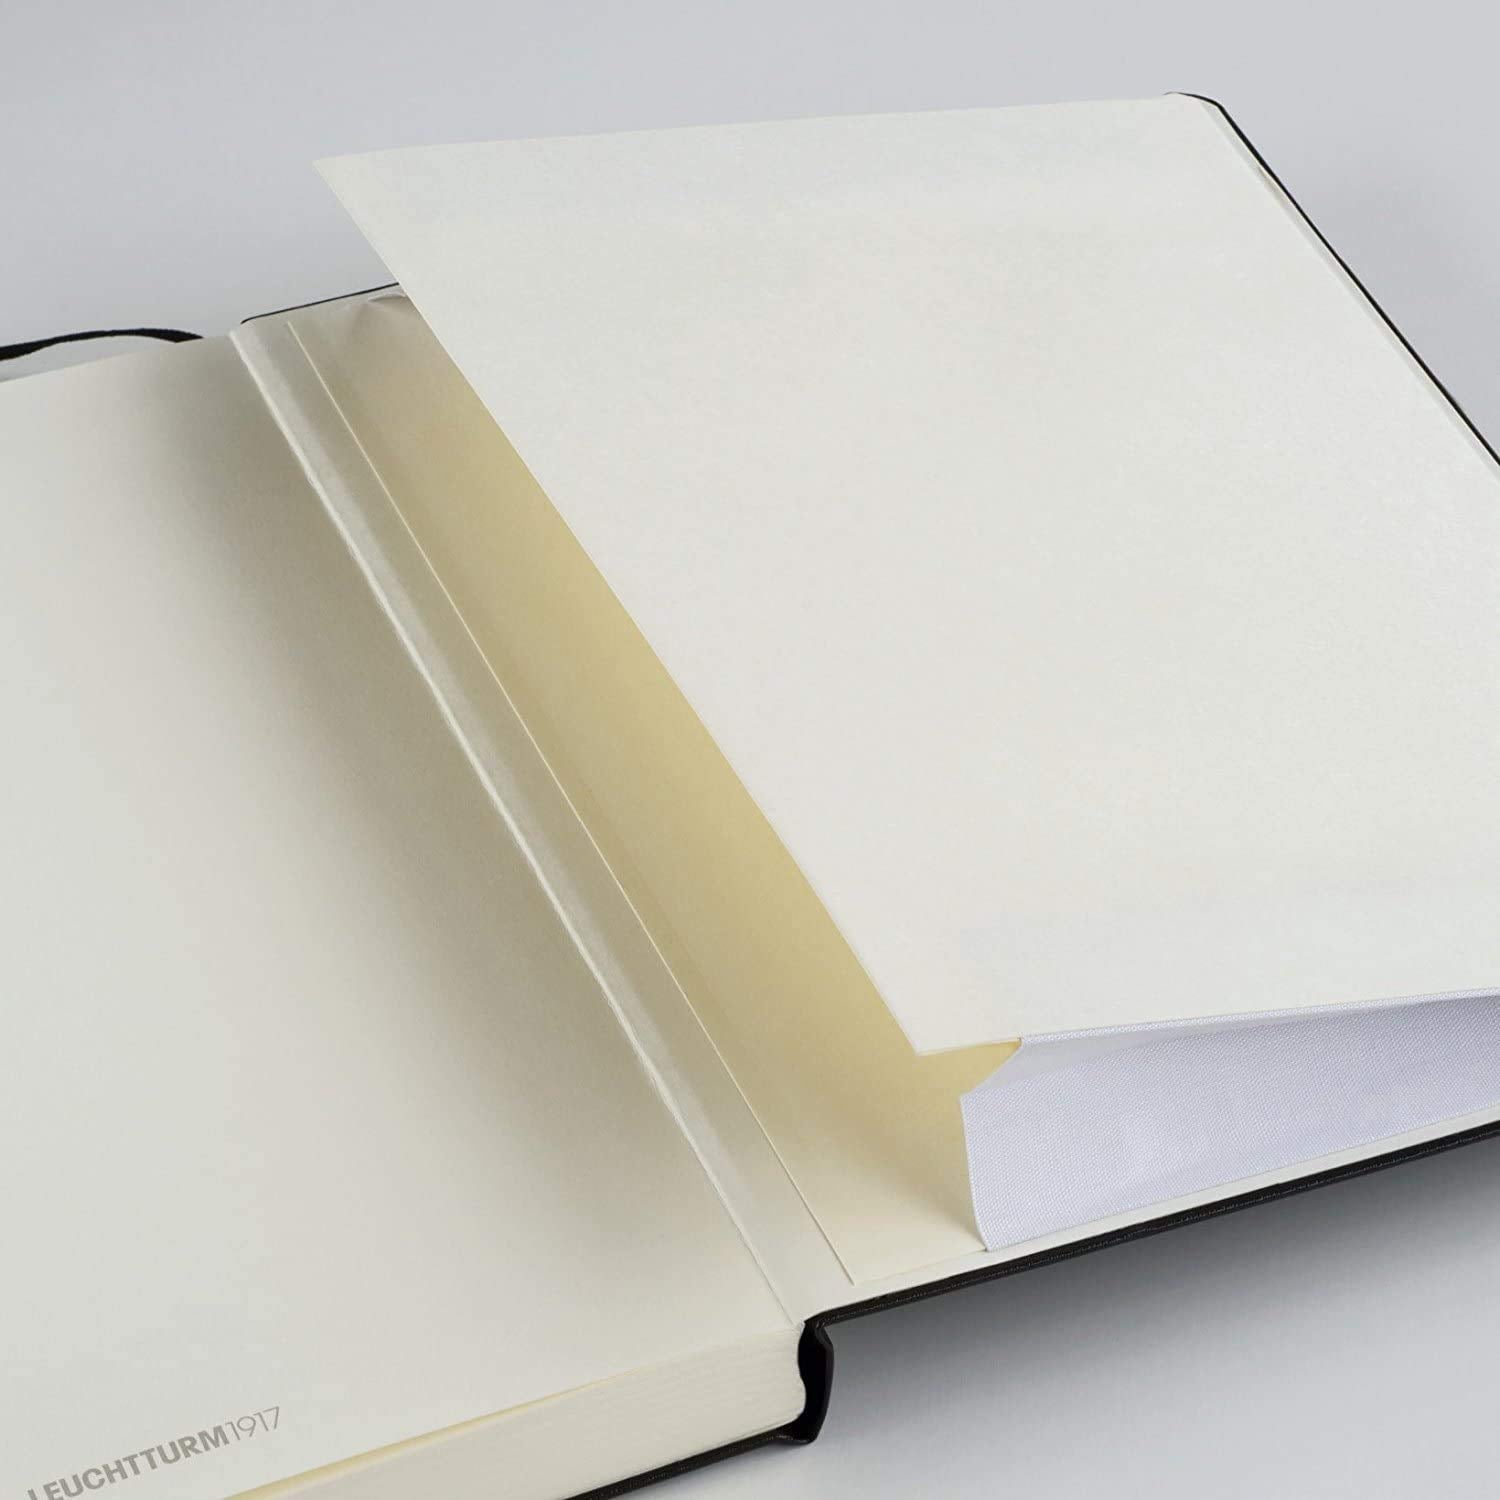 LEUCHTTURM1917 342930 Notebook Pocket (A6), 185 numbered pages, ruled, orange